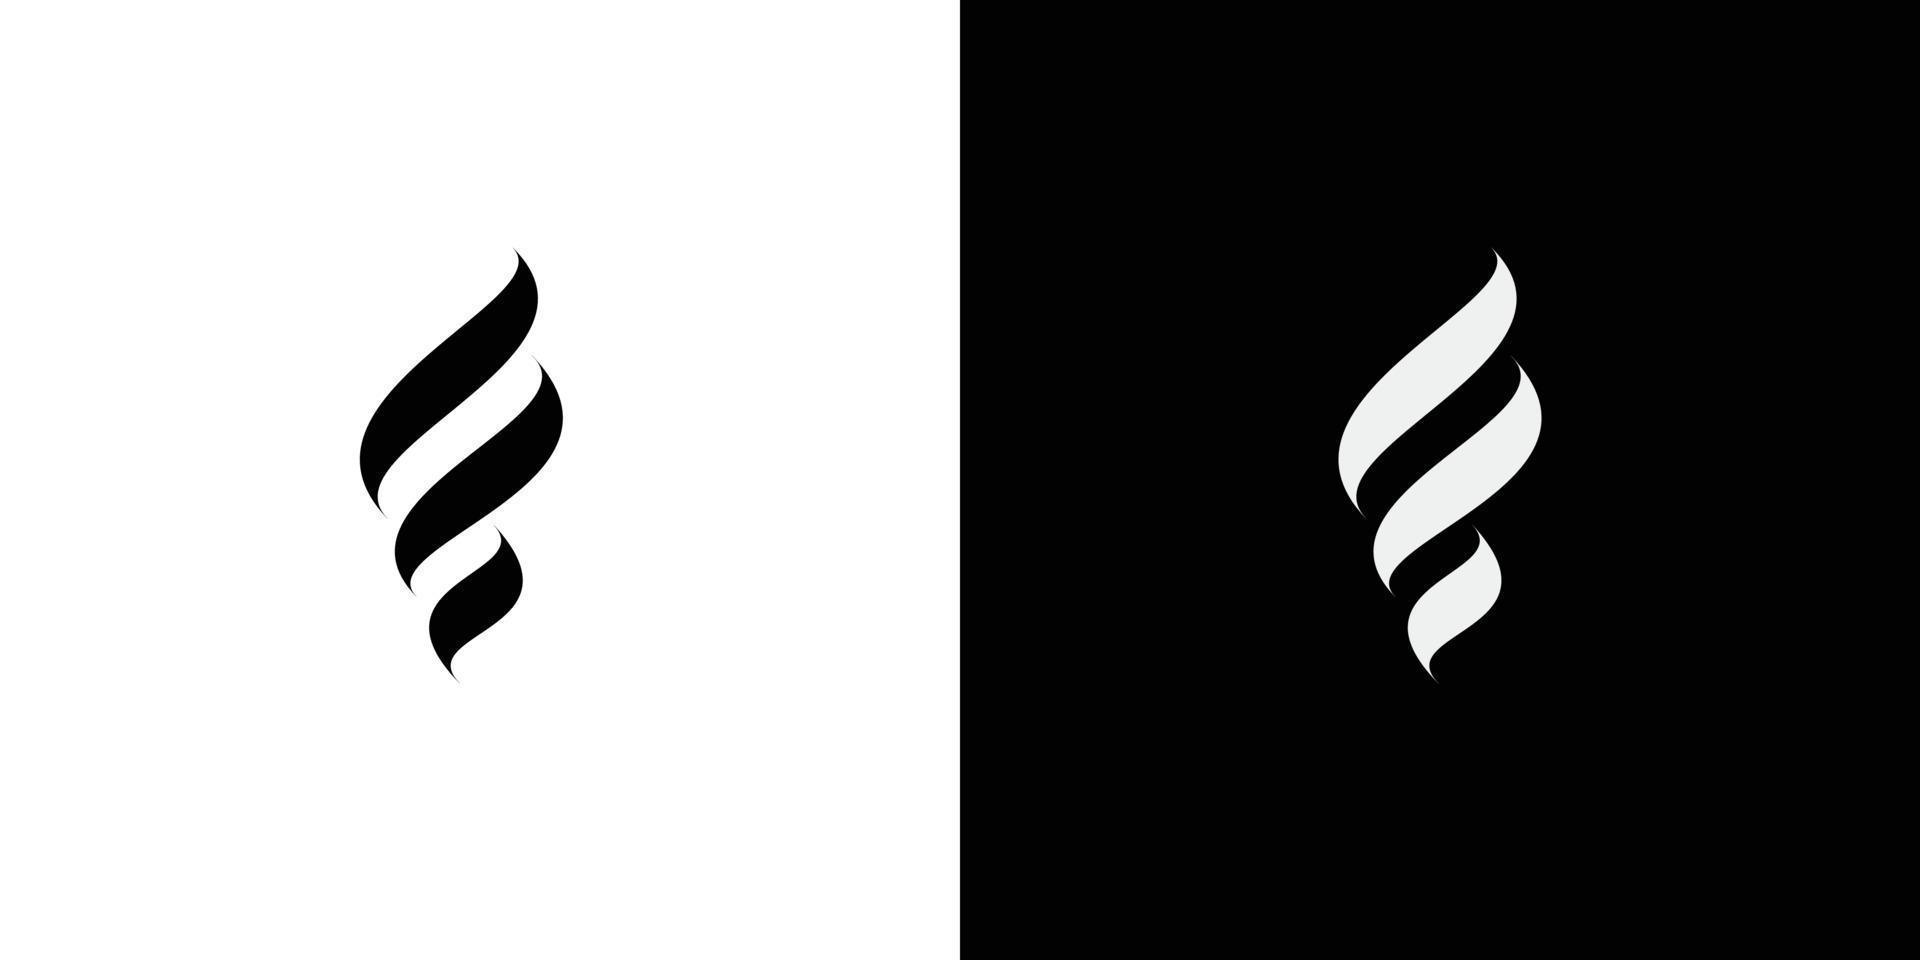 modern en elegant f-logo-ontwerp vector